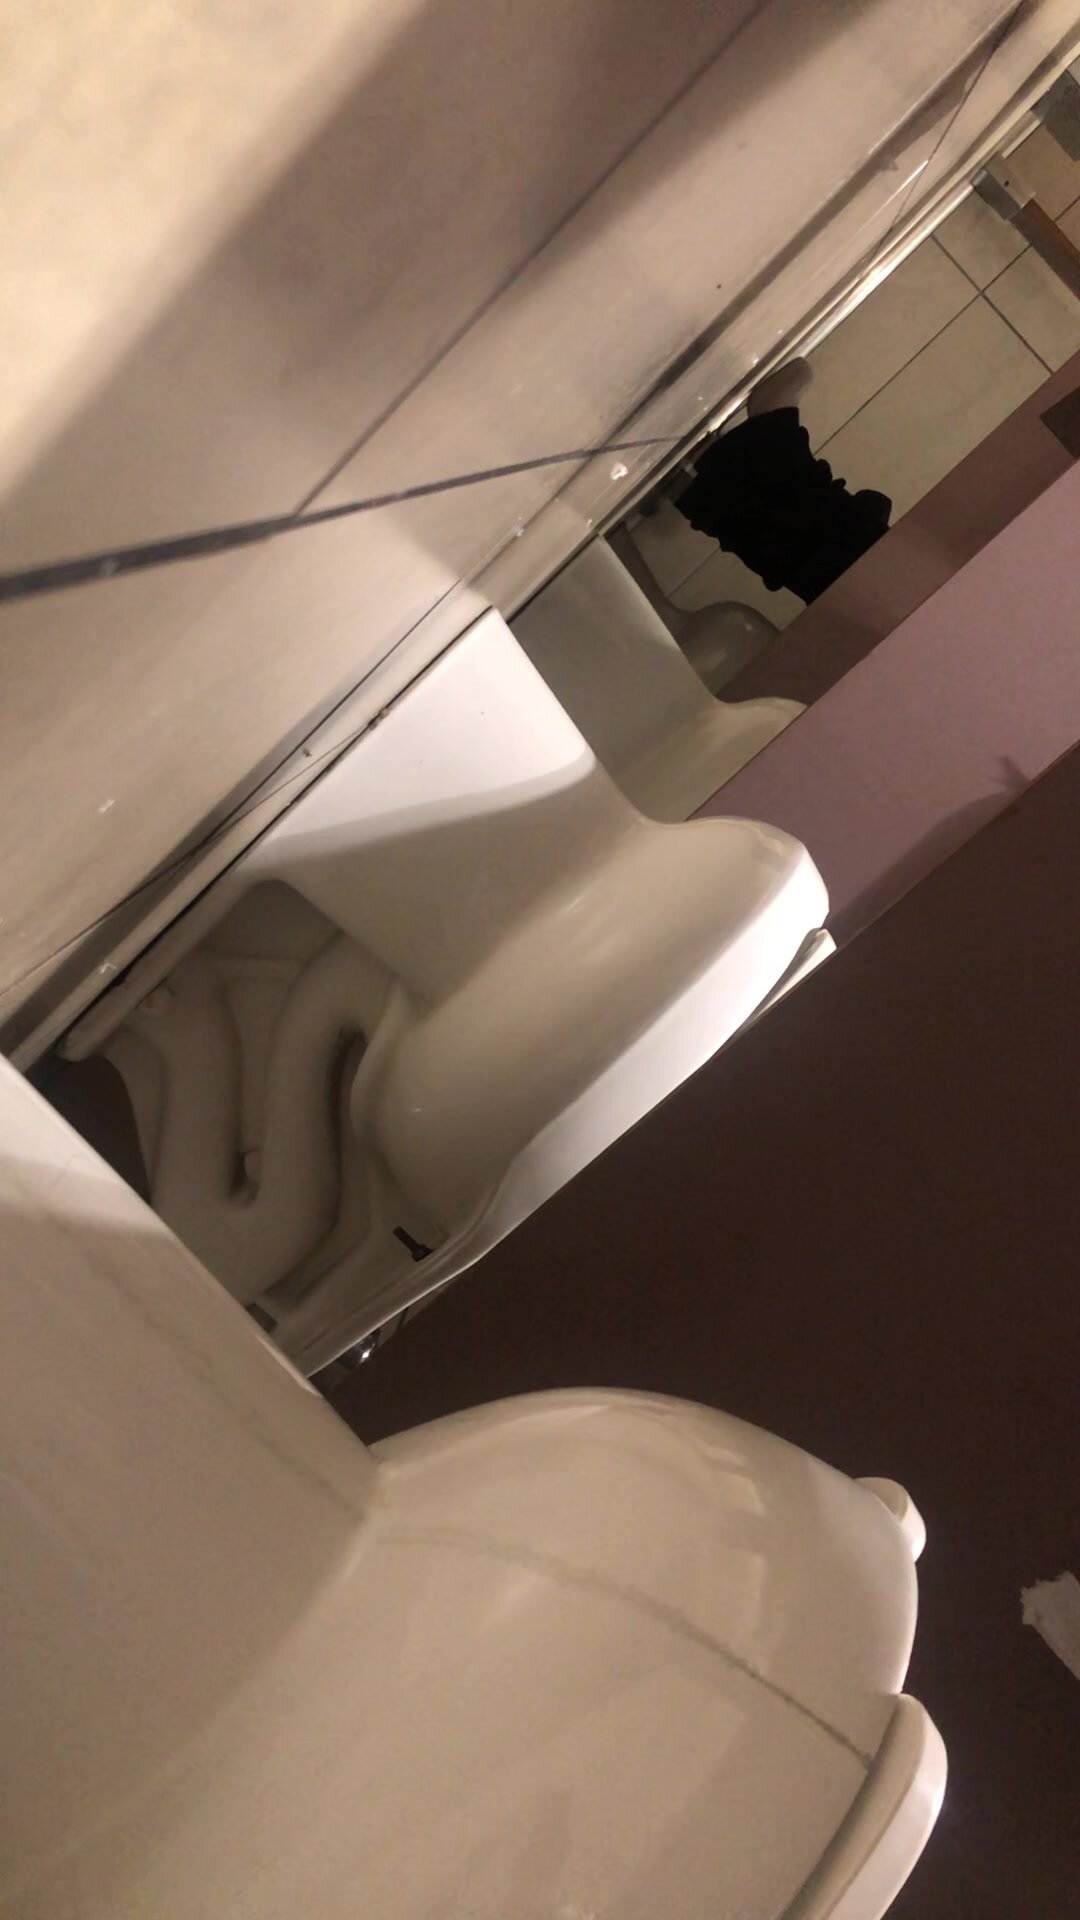 Mall girls bathroom understall